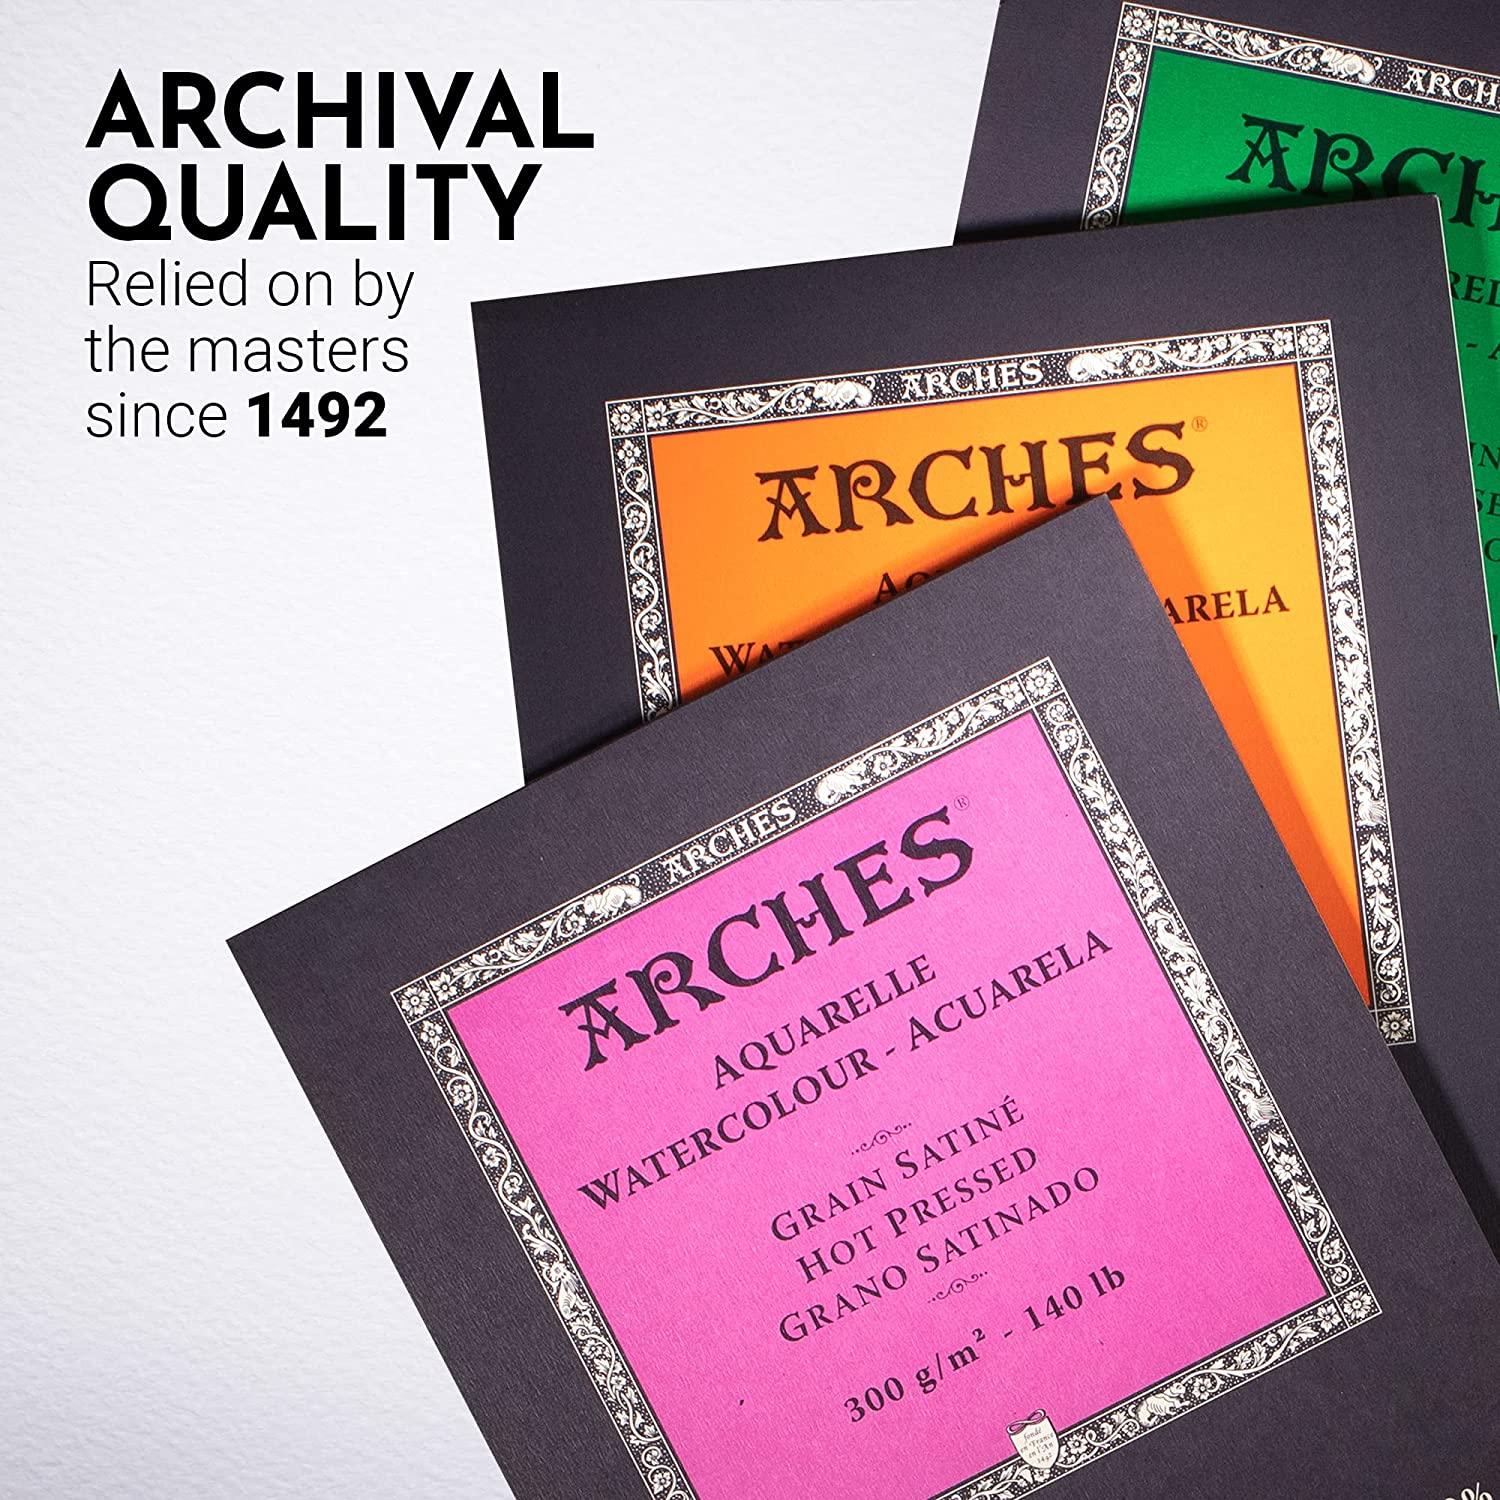 Arches Watercolor Block - 12'' x 16'', Cold Press, 20 Sheets